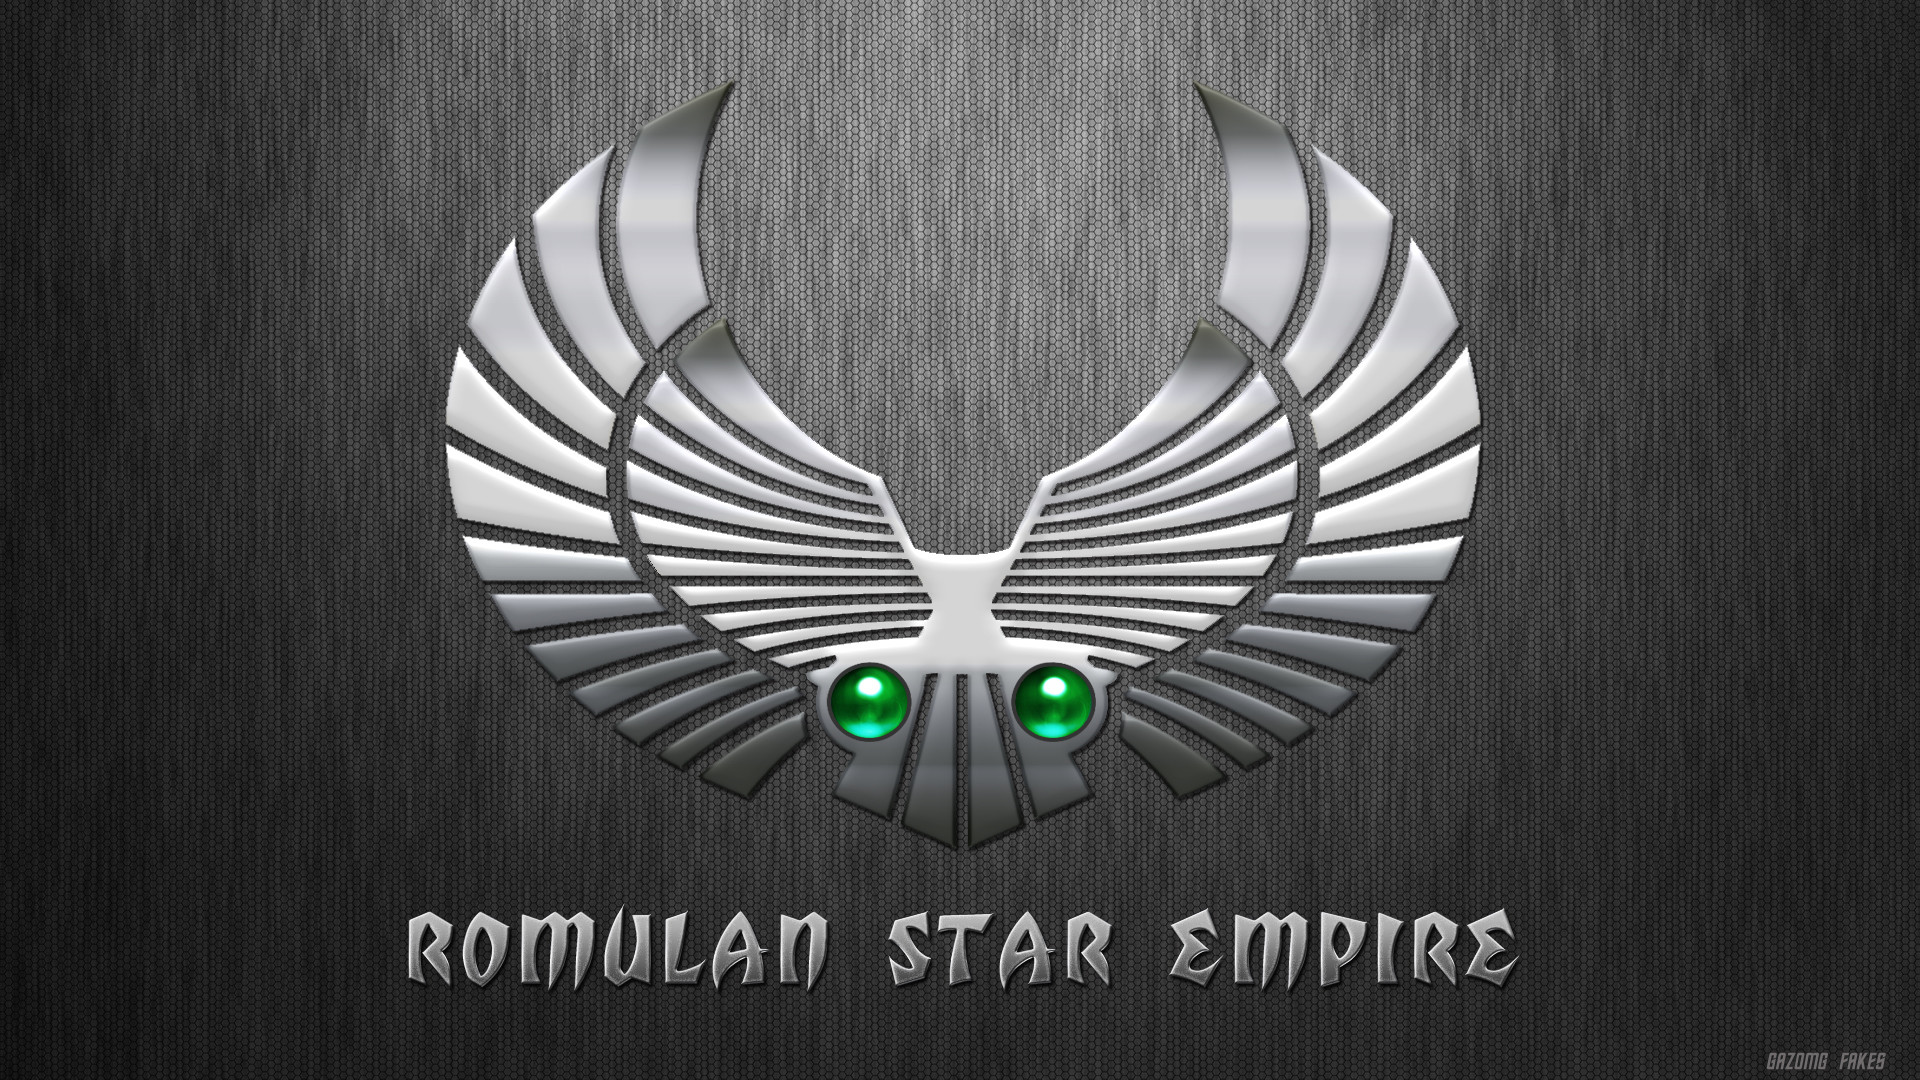 1920x1080 Romulan Star Empire Logo by gazomg Romulan Star Empire Logo by gazomg